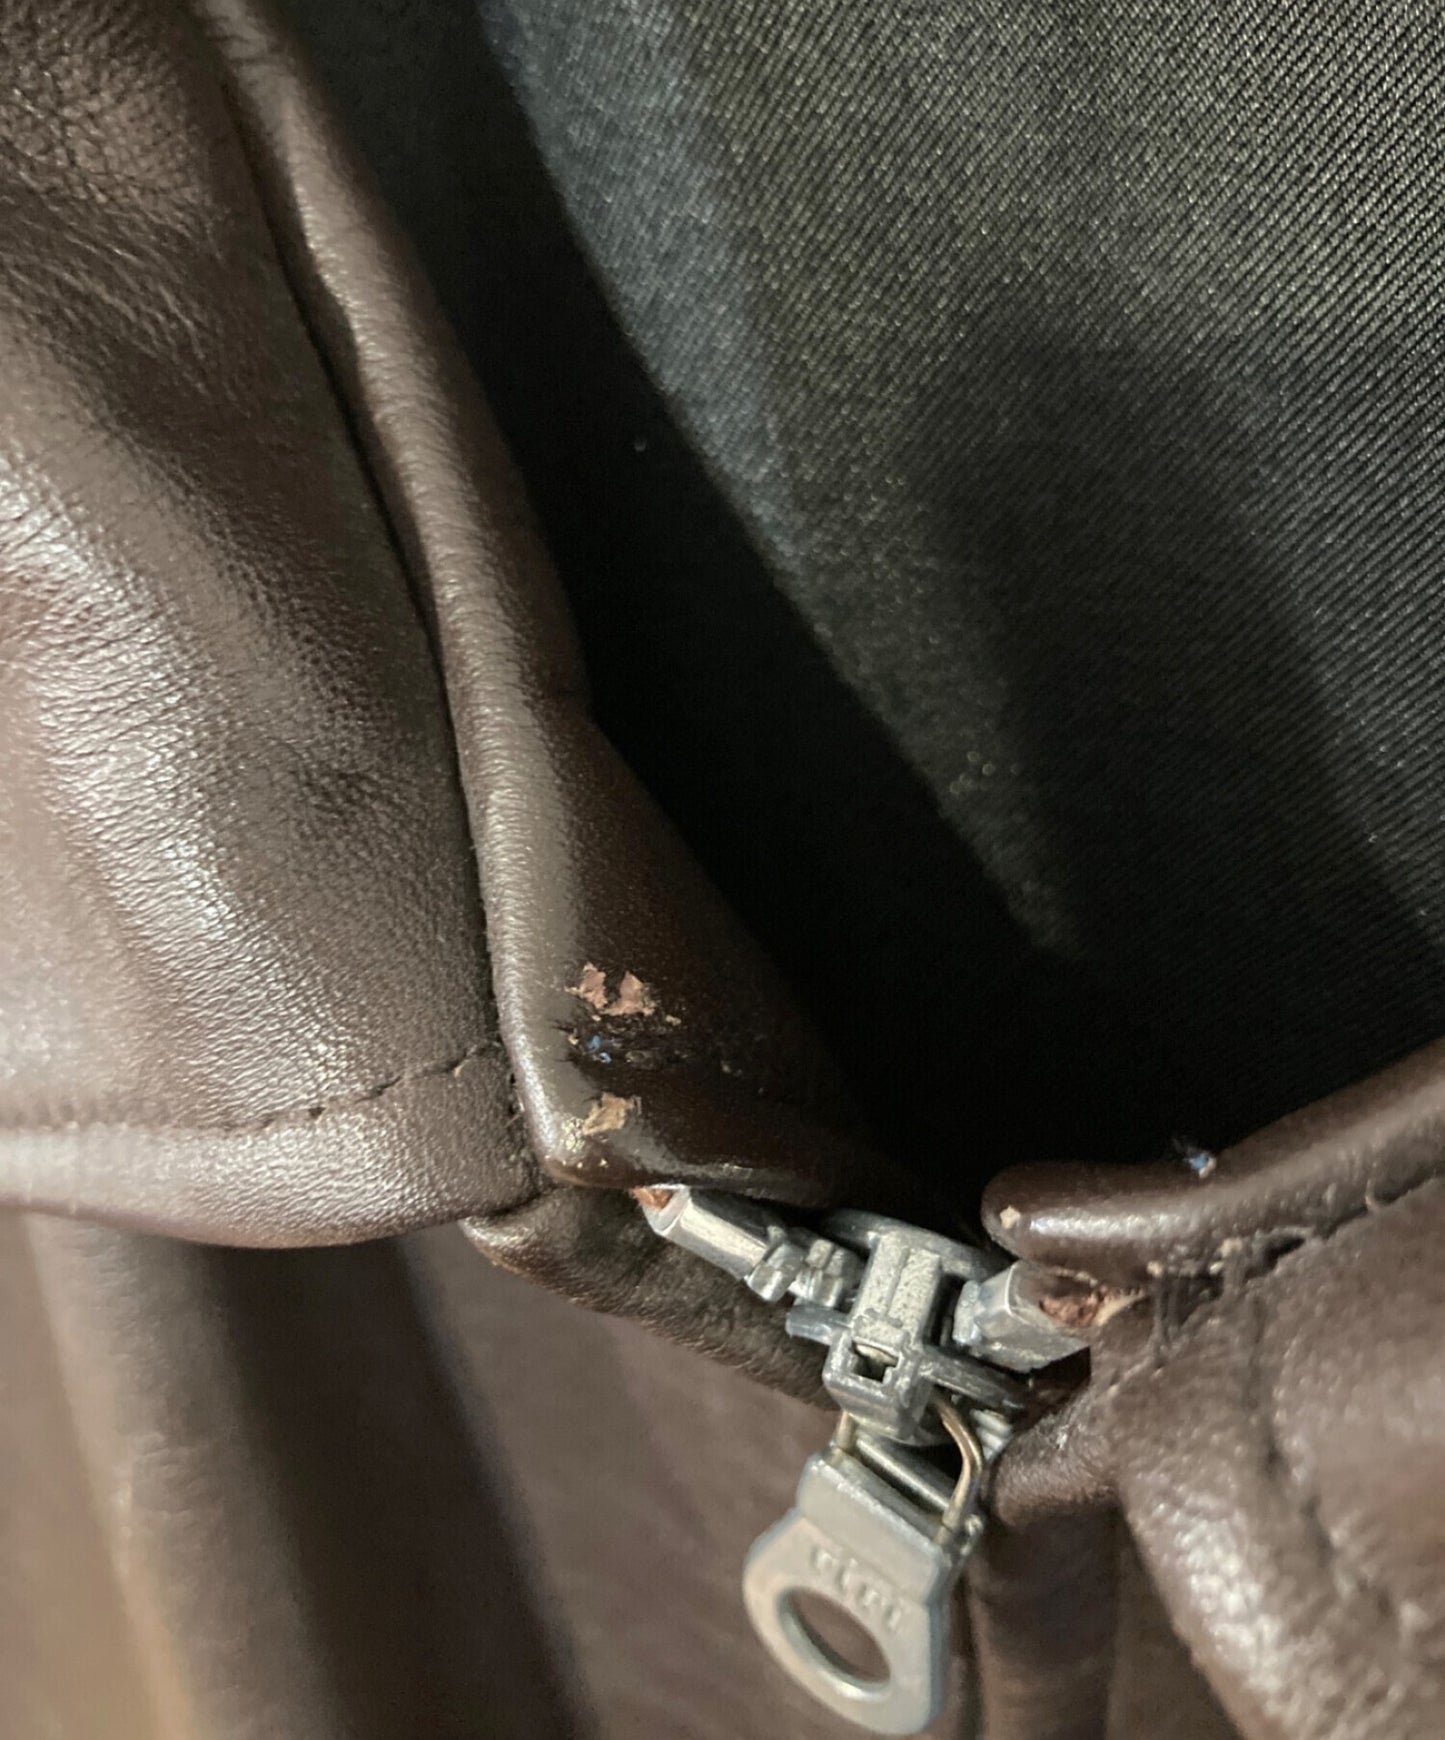 [Pre-owned] YOHJI YAMAMOTO DURBAN leather jacket x806701